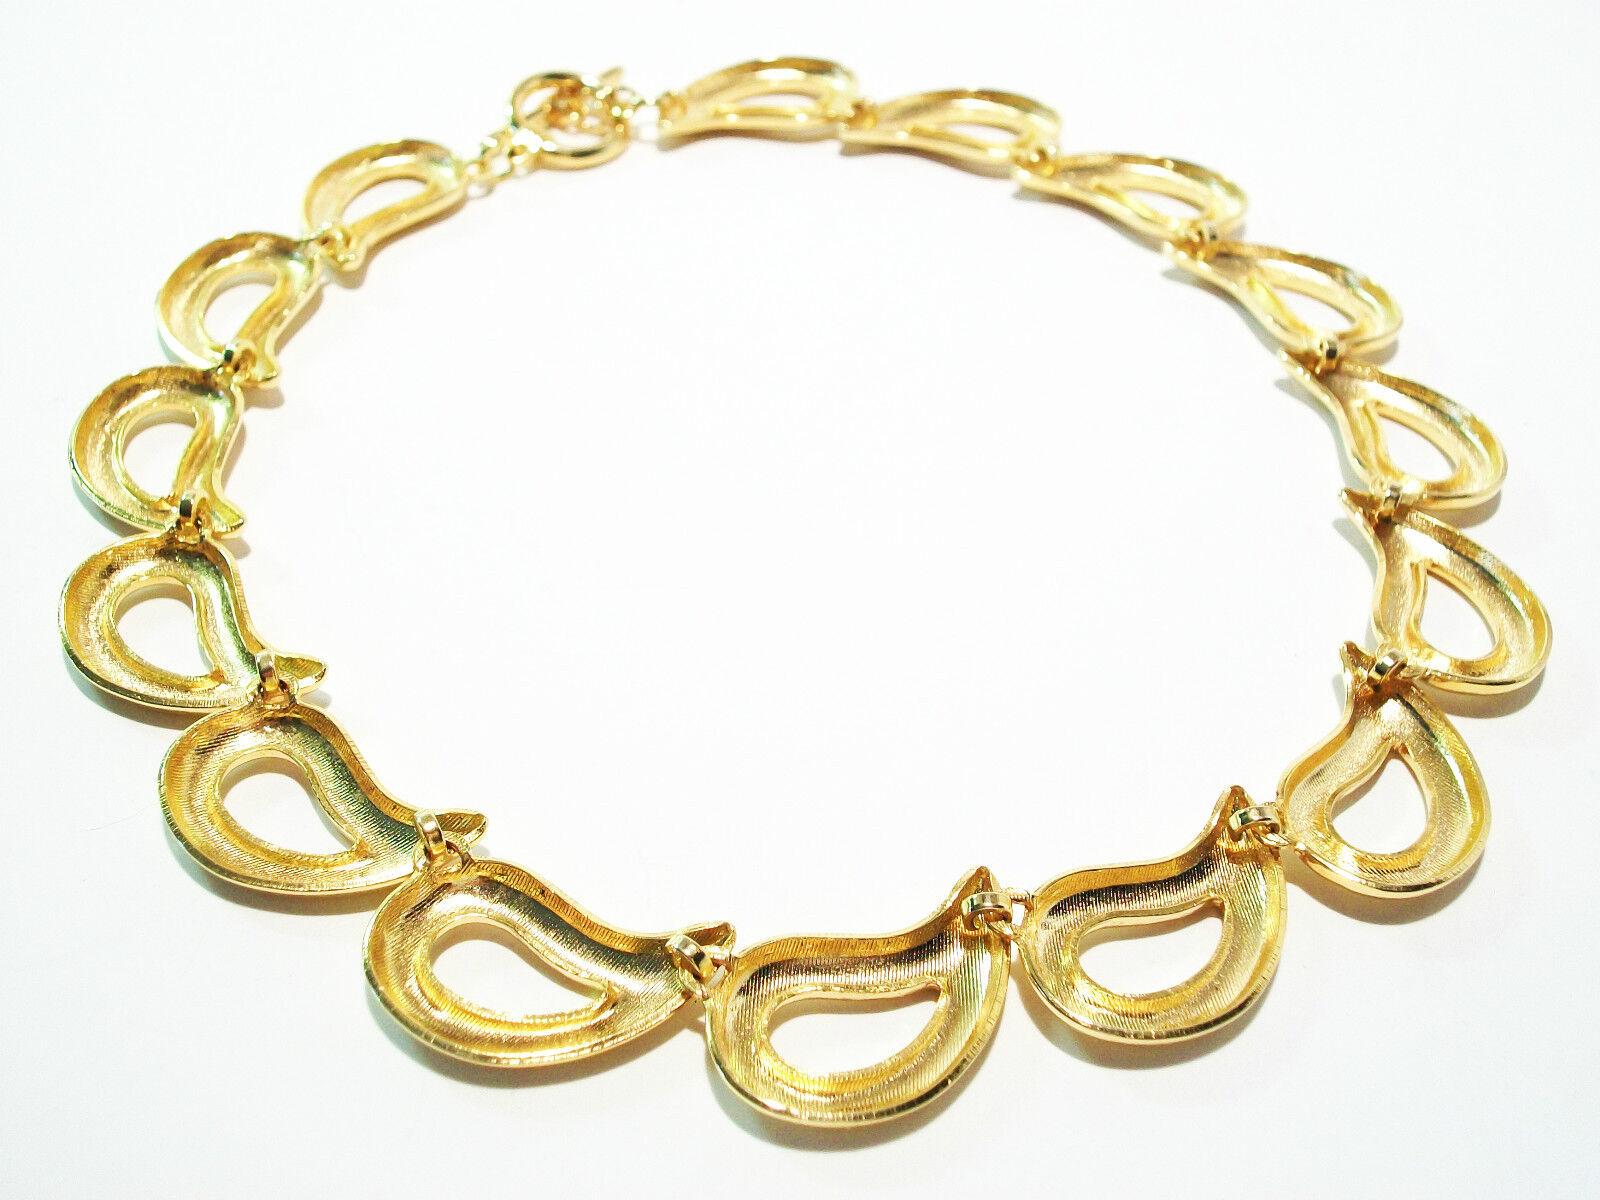 Vintage Gold Tone Teardrop Design Necklace - Toggle Closure - Unsigned - C. 1980 For Sale 3